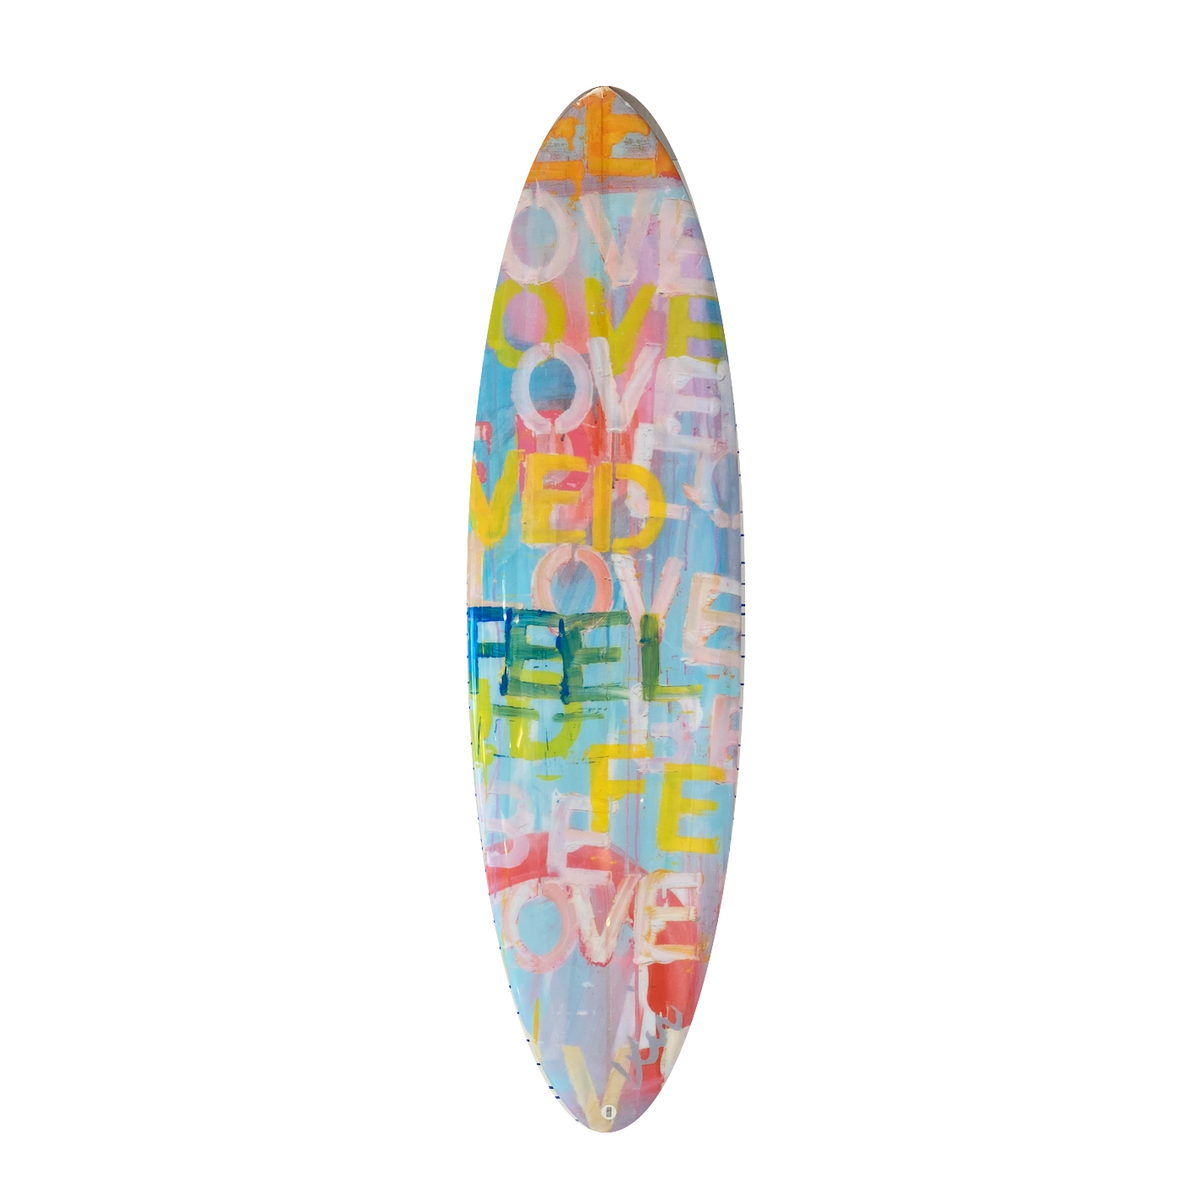 Colorful multi feel love wall decorative surfboard – KERRI ROSENTHAL